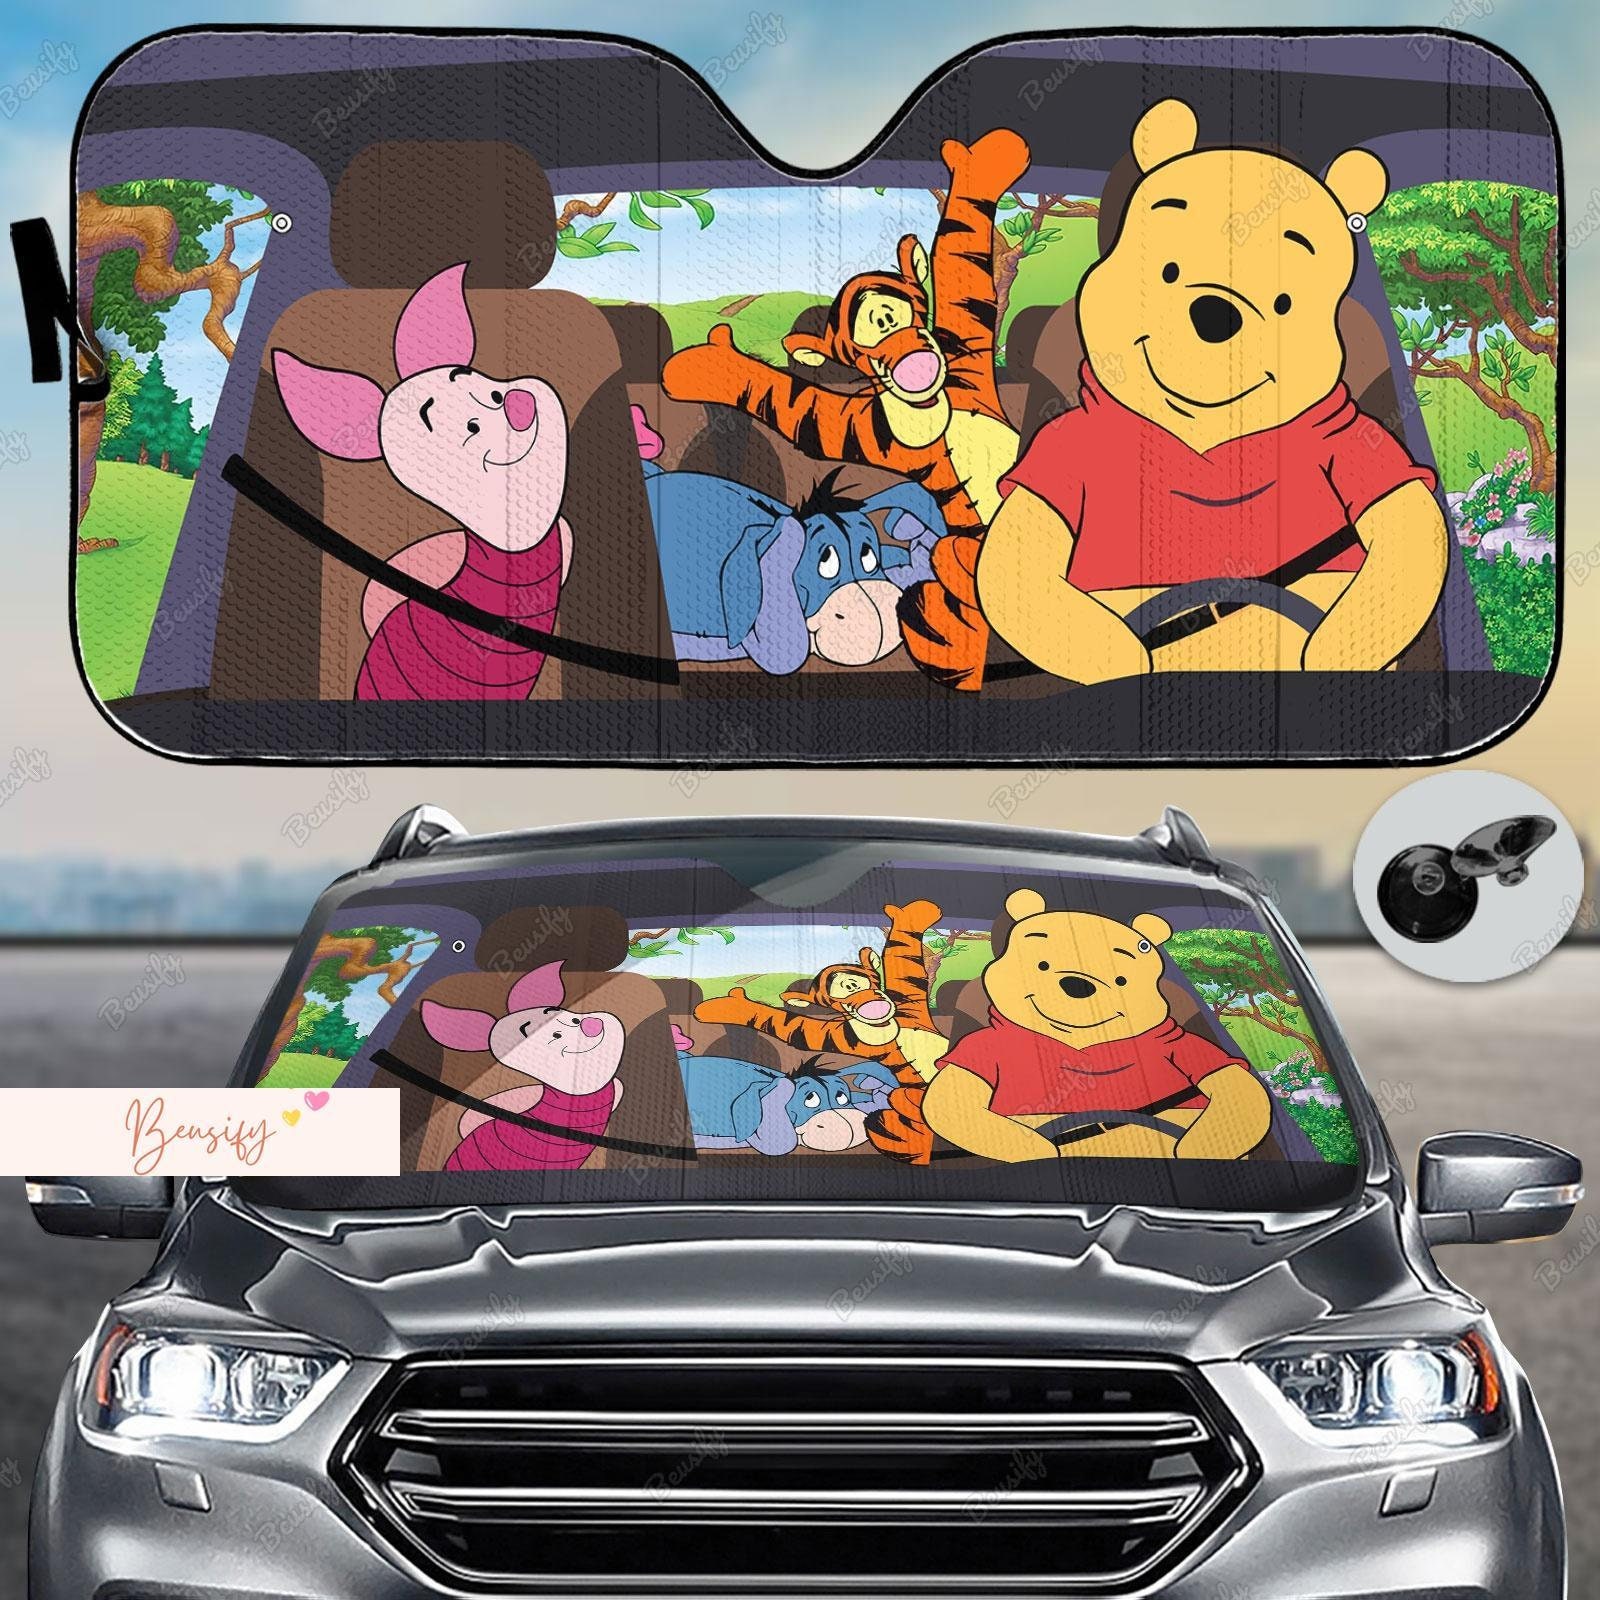 Discover ディズニー クマのプーさん ディズニーランド 車用サンシェード おしゃれディズニーキャラクター 車のアクセサリー